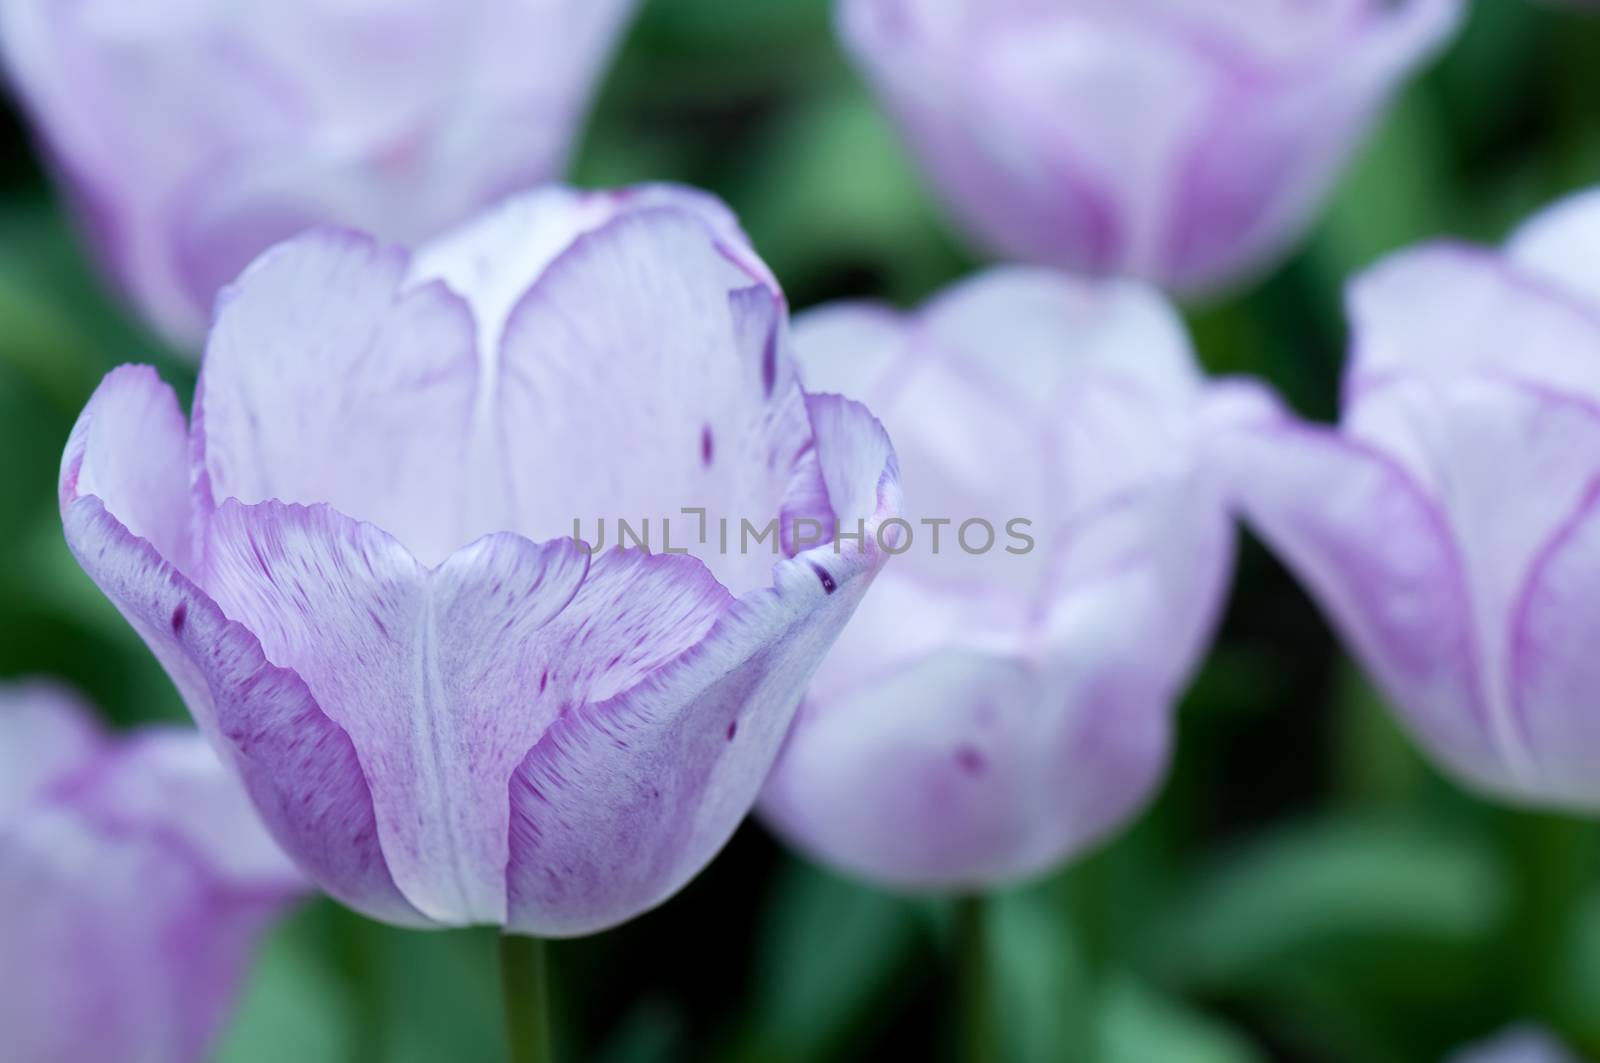 Shot of group purple tulips in outdoor